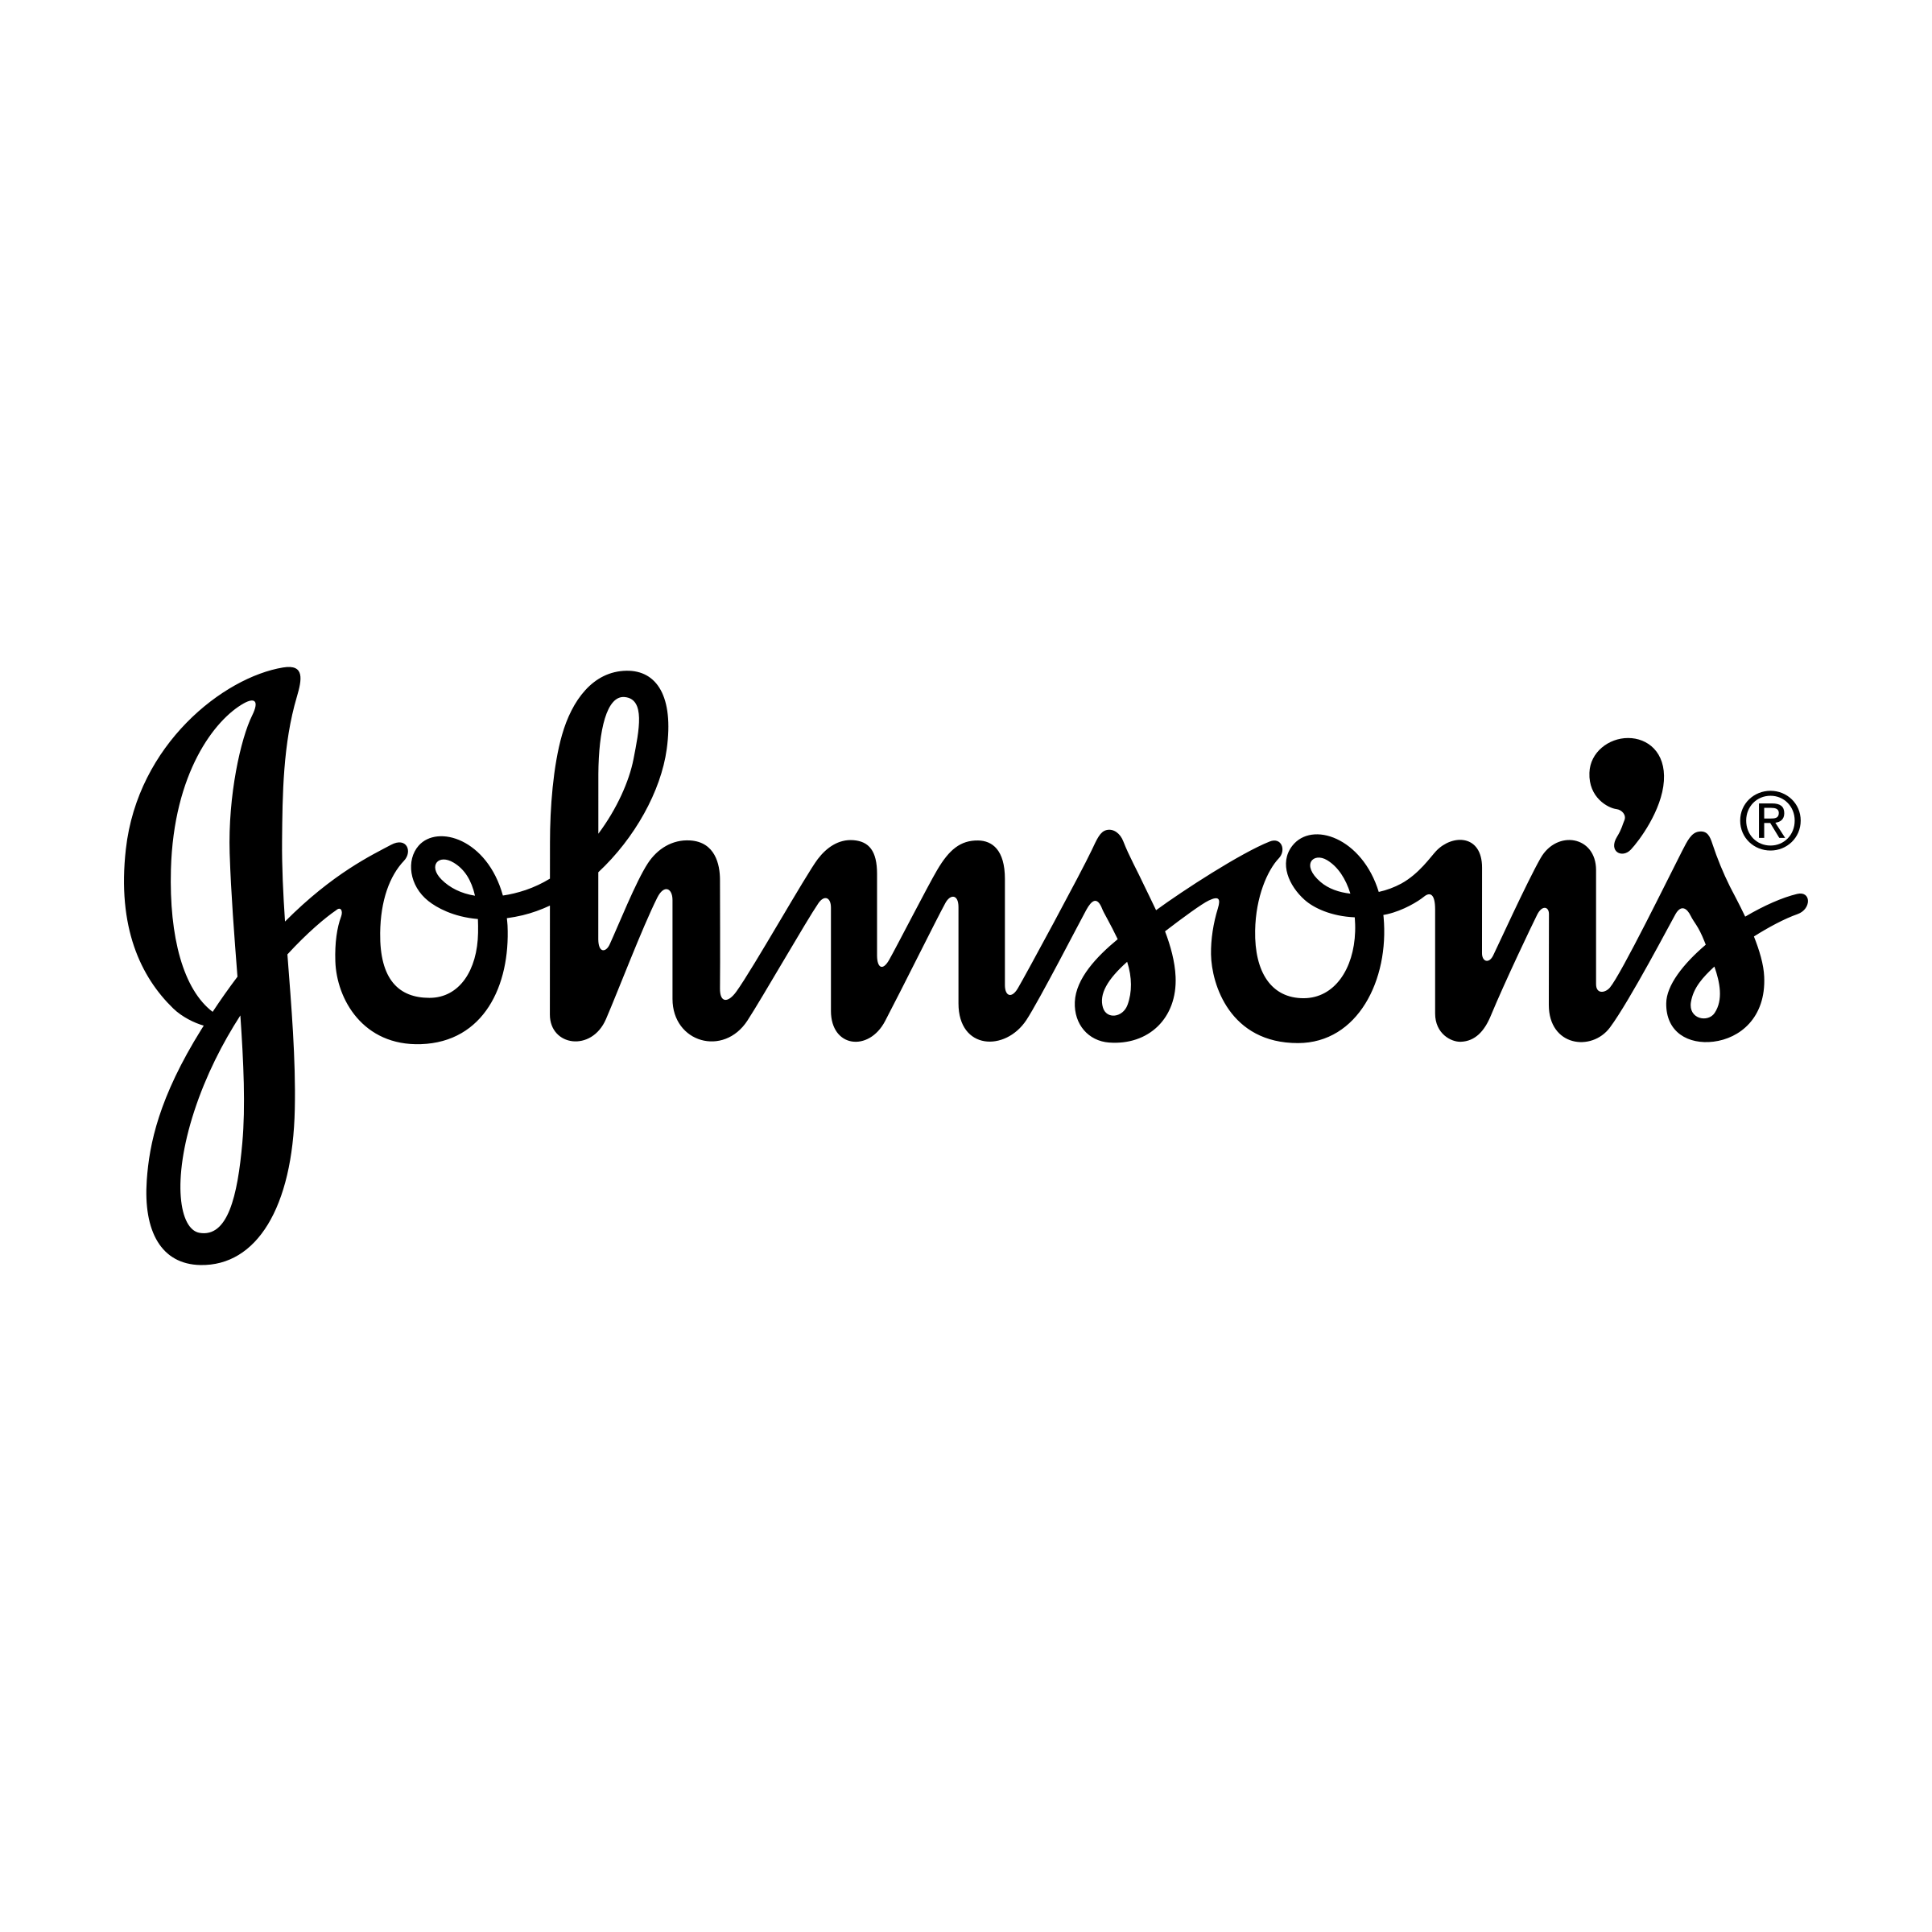 Hohnson Logo - Johnson's Logo PNG Transparent & SVG Vector - Freebie Supply